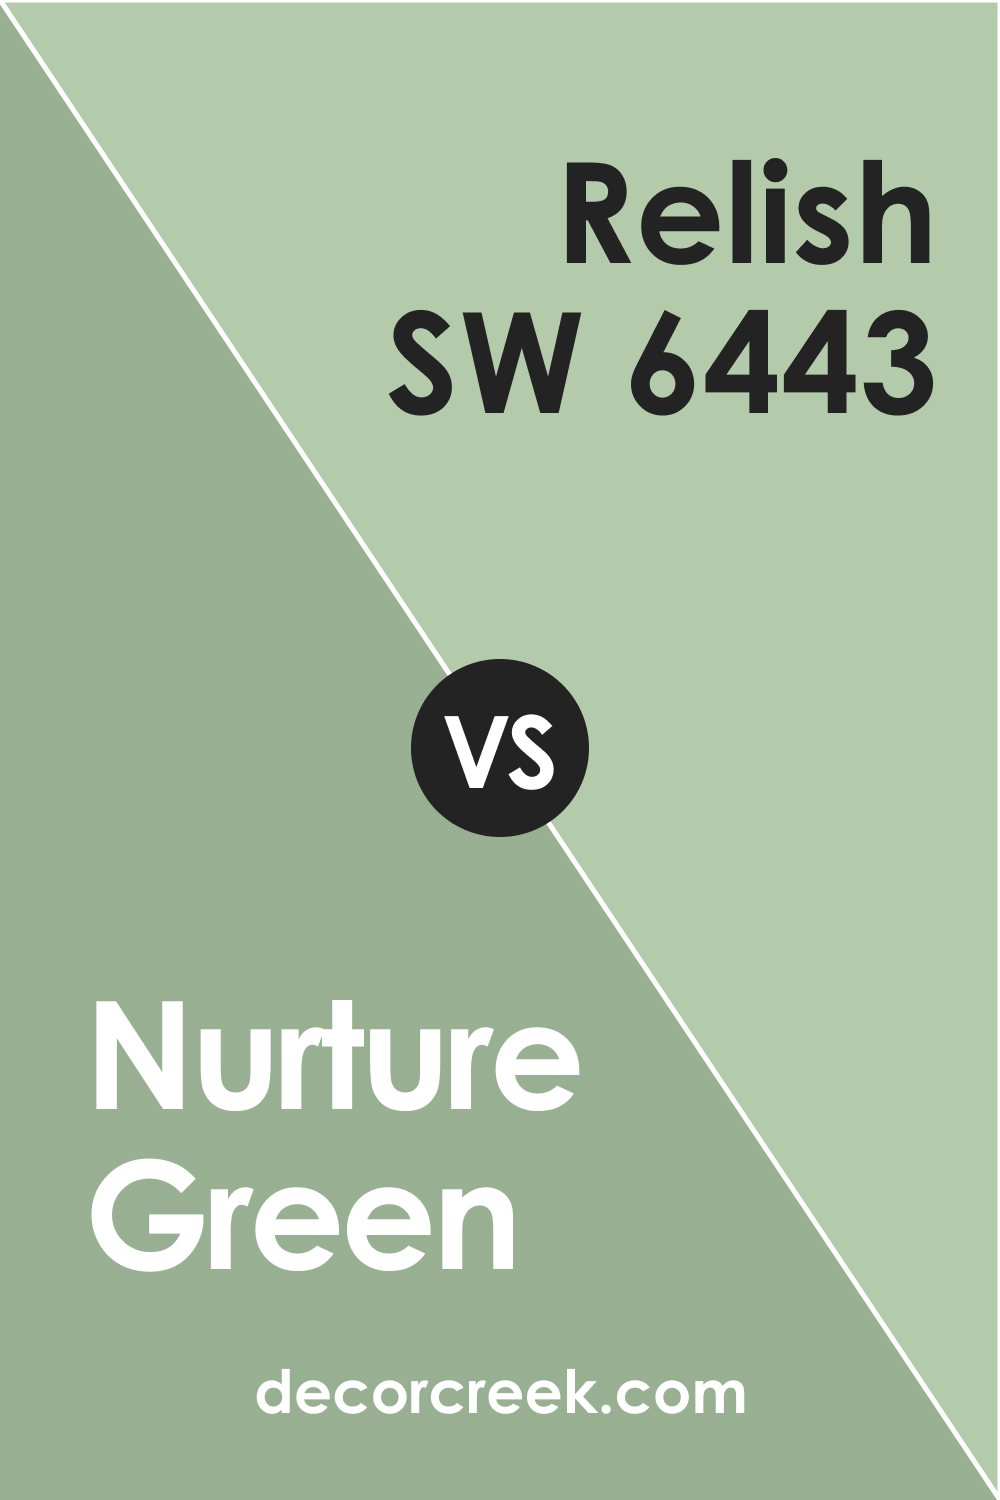 Nurture Green vs Relish